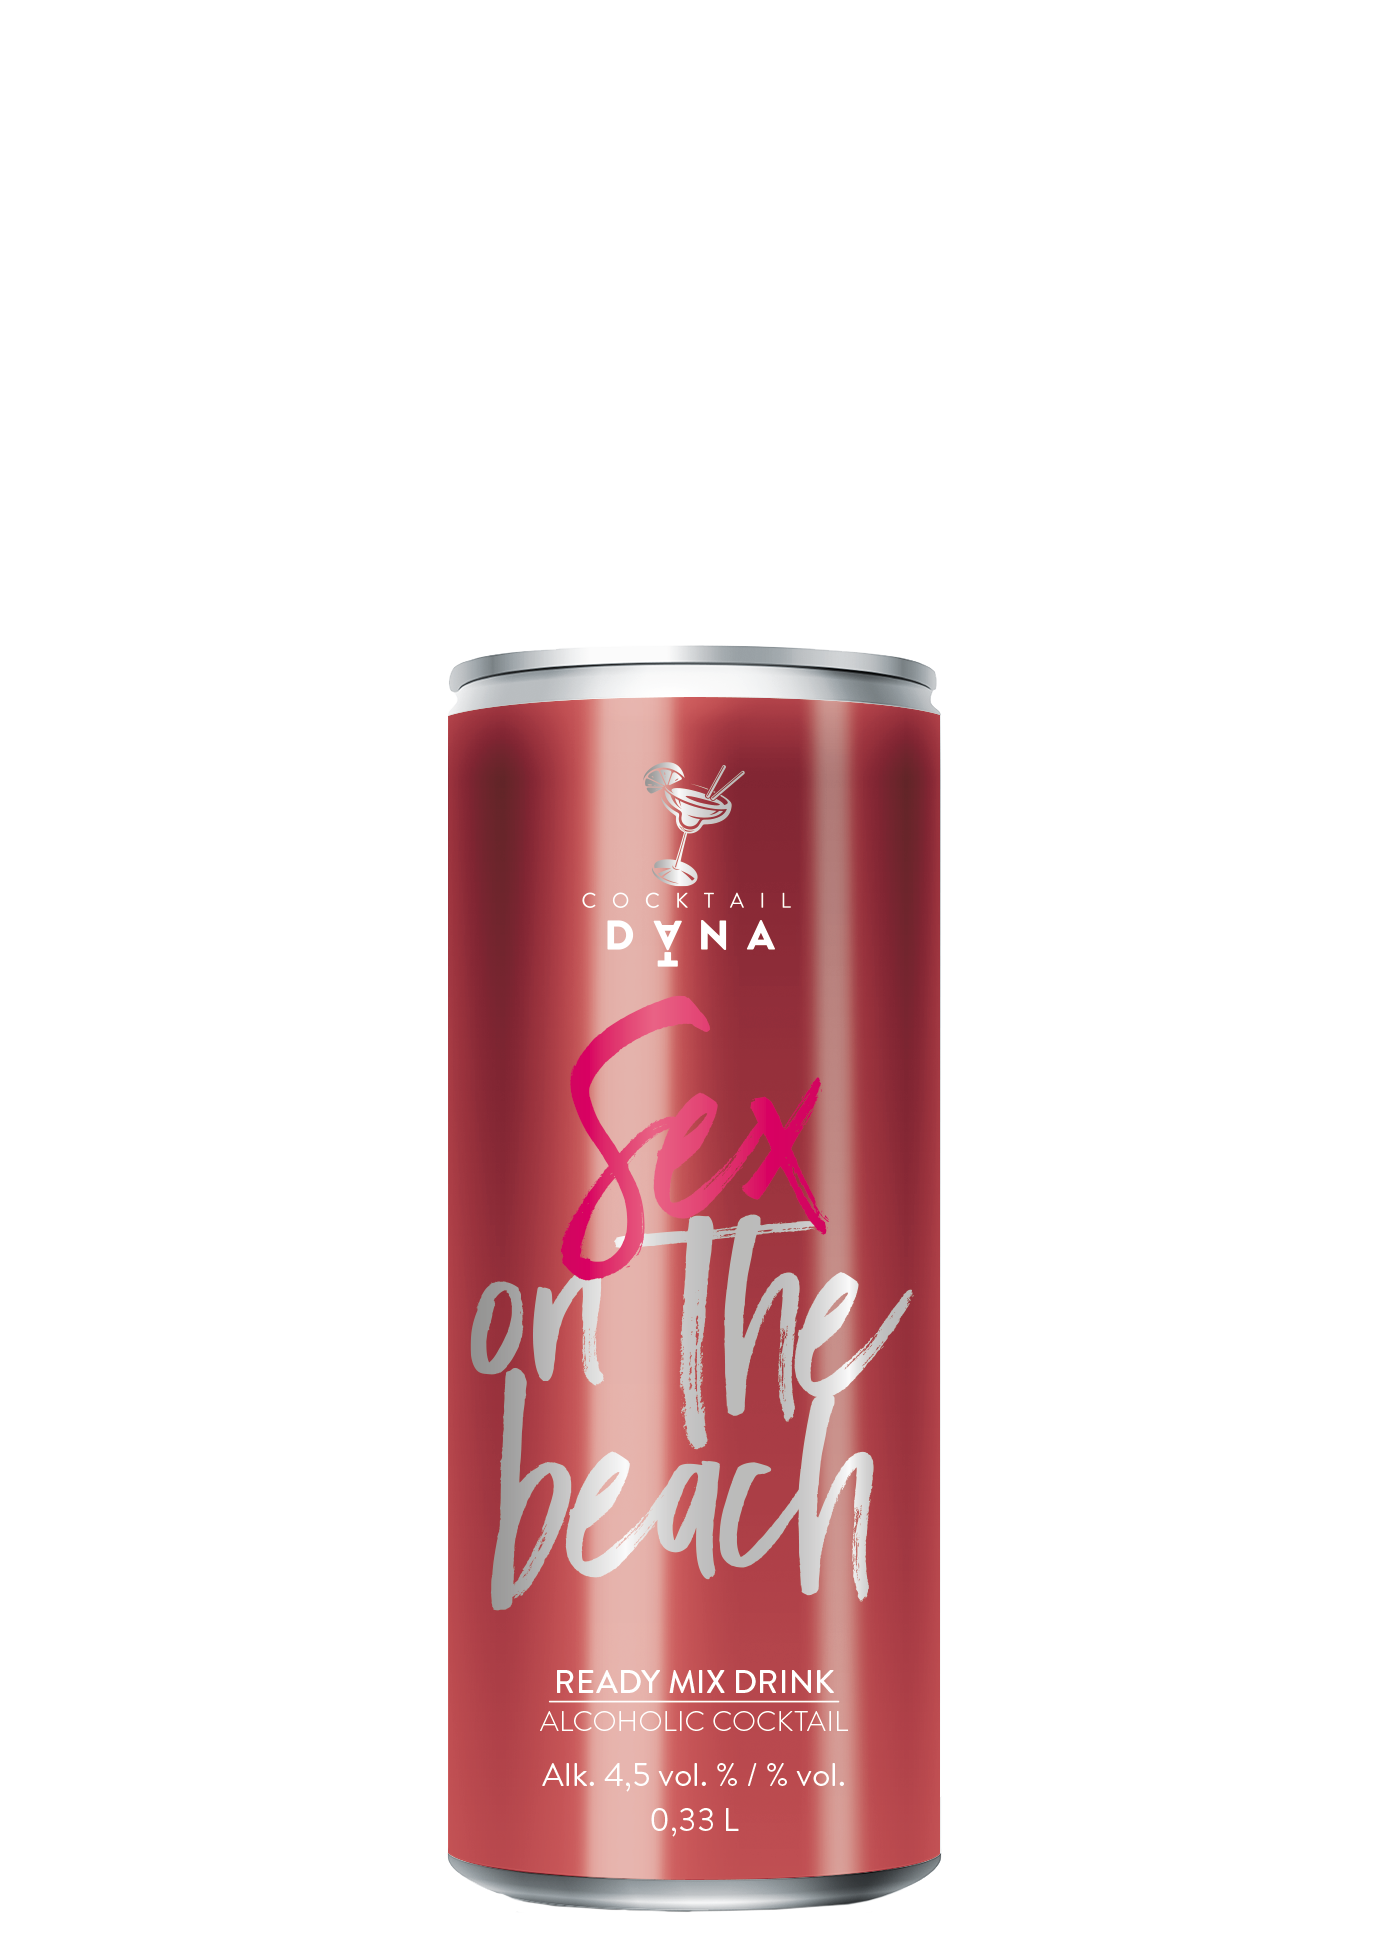 Dana Cocktail Sex on the beach, alk.: 4,5 vol. %